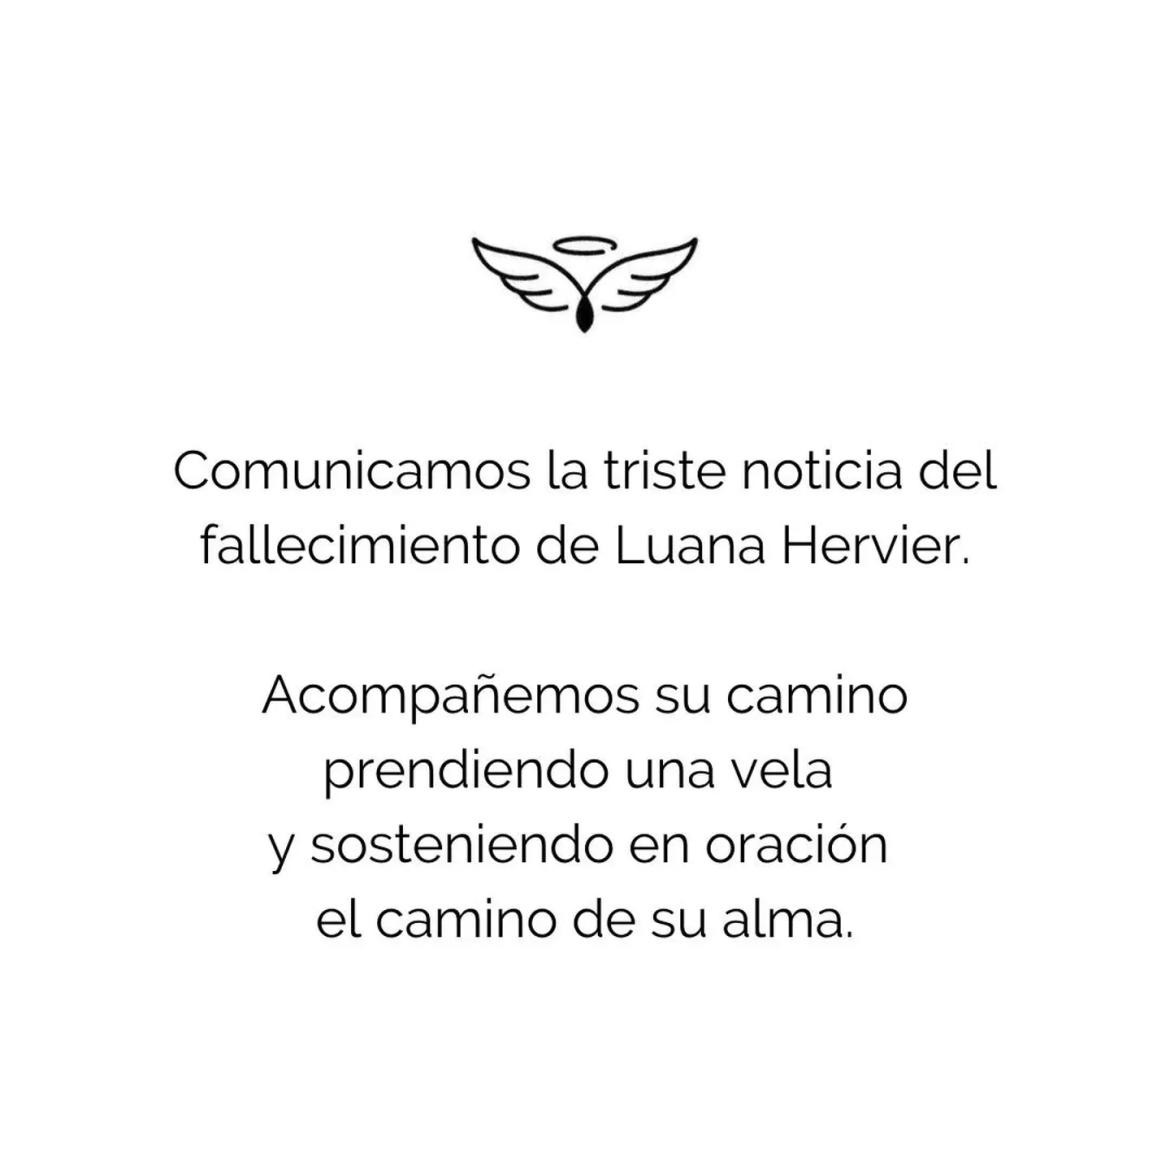 El posteo de la familia de Luana Hervier. Foto: Instagram @luanahervier